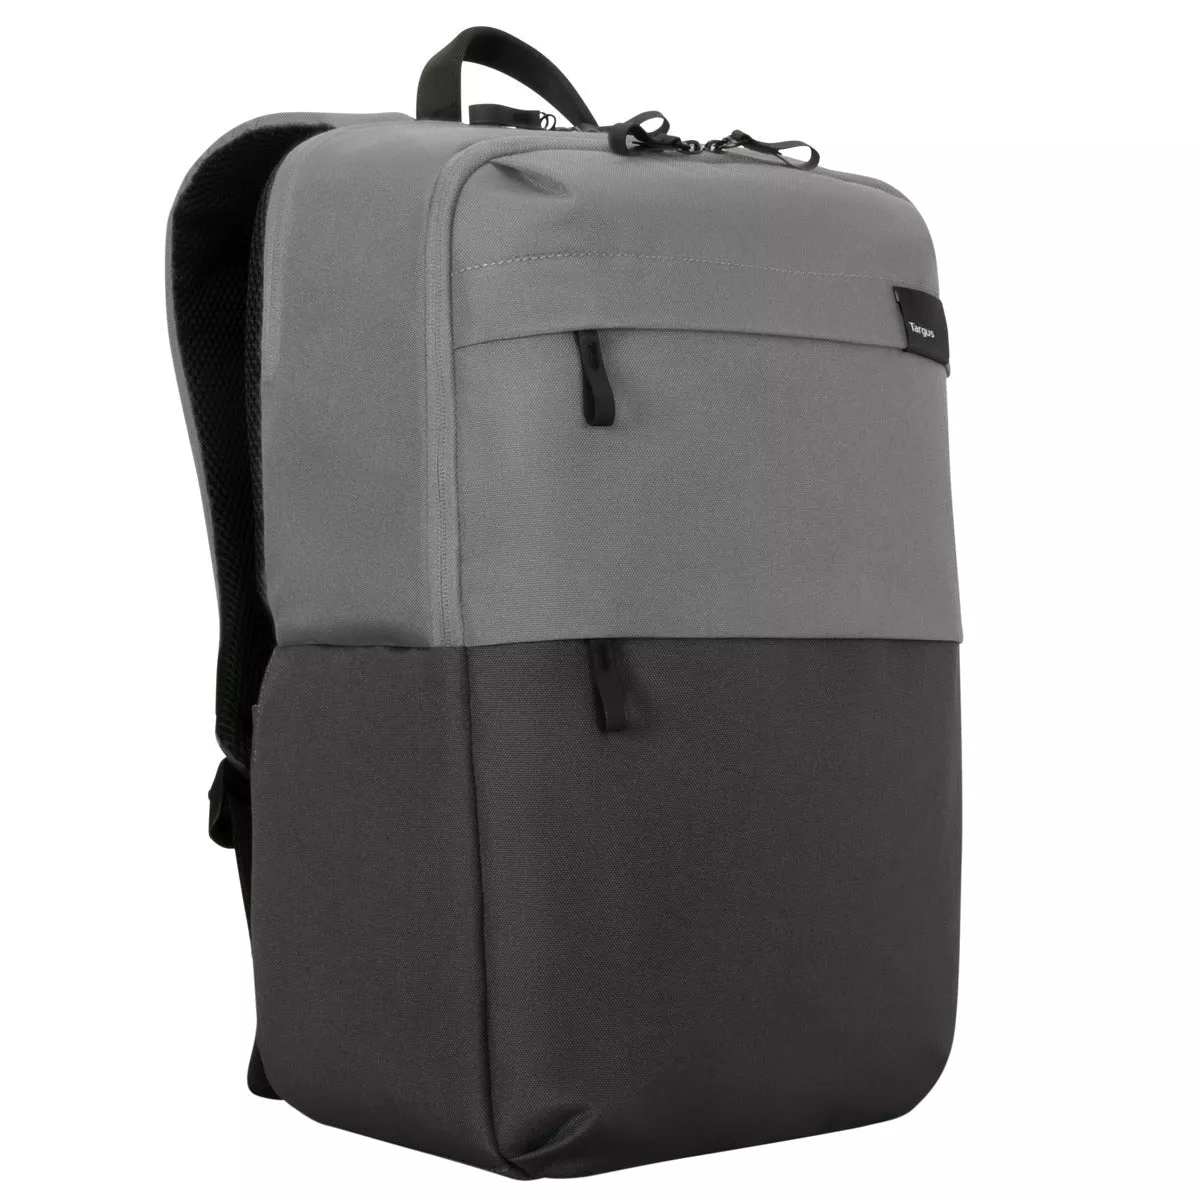 Achat TARGUS 15.6p Sagano Travel Backpack Grey au meilleur prix